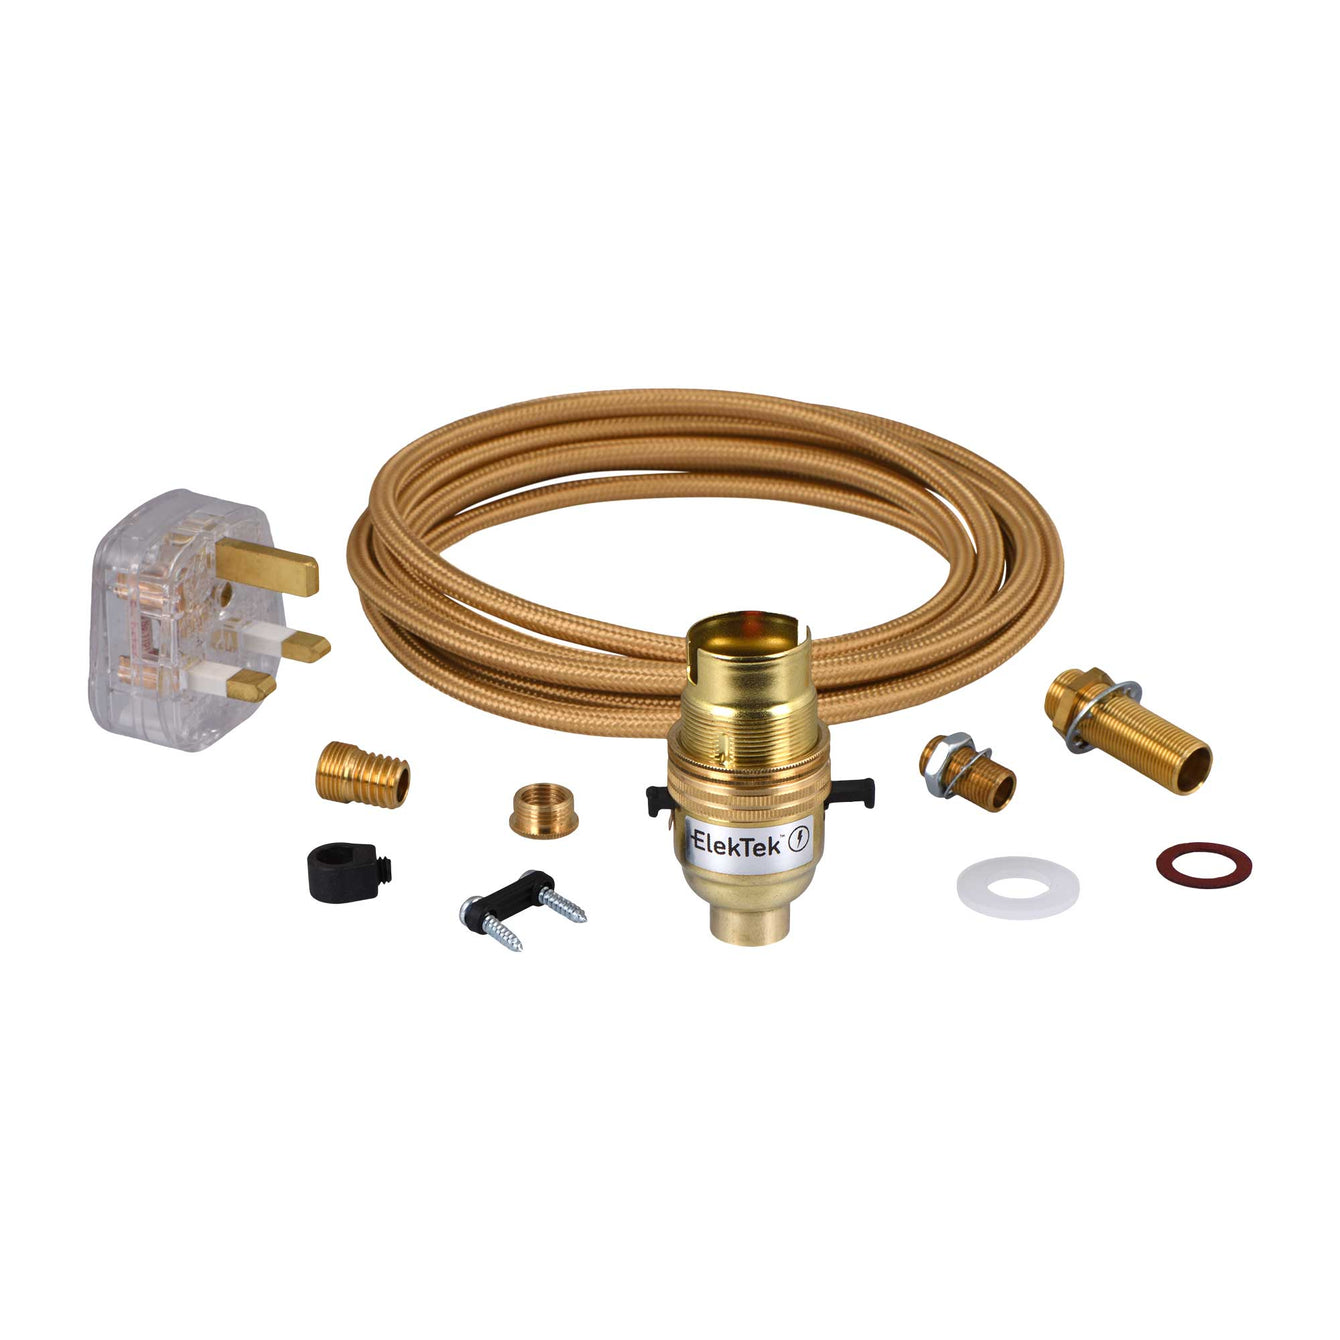 ElekTek Premium Lamp Kit Brass Safety Switch B22 Lamp Holder with Gold Flex and 3A UK Plug - Buy It Better Round